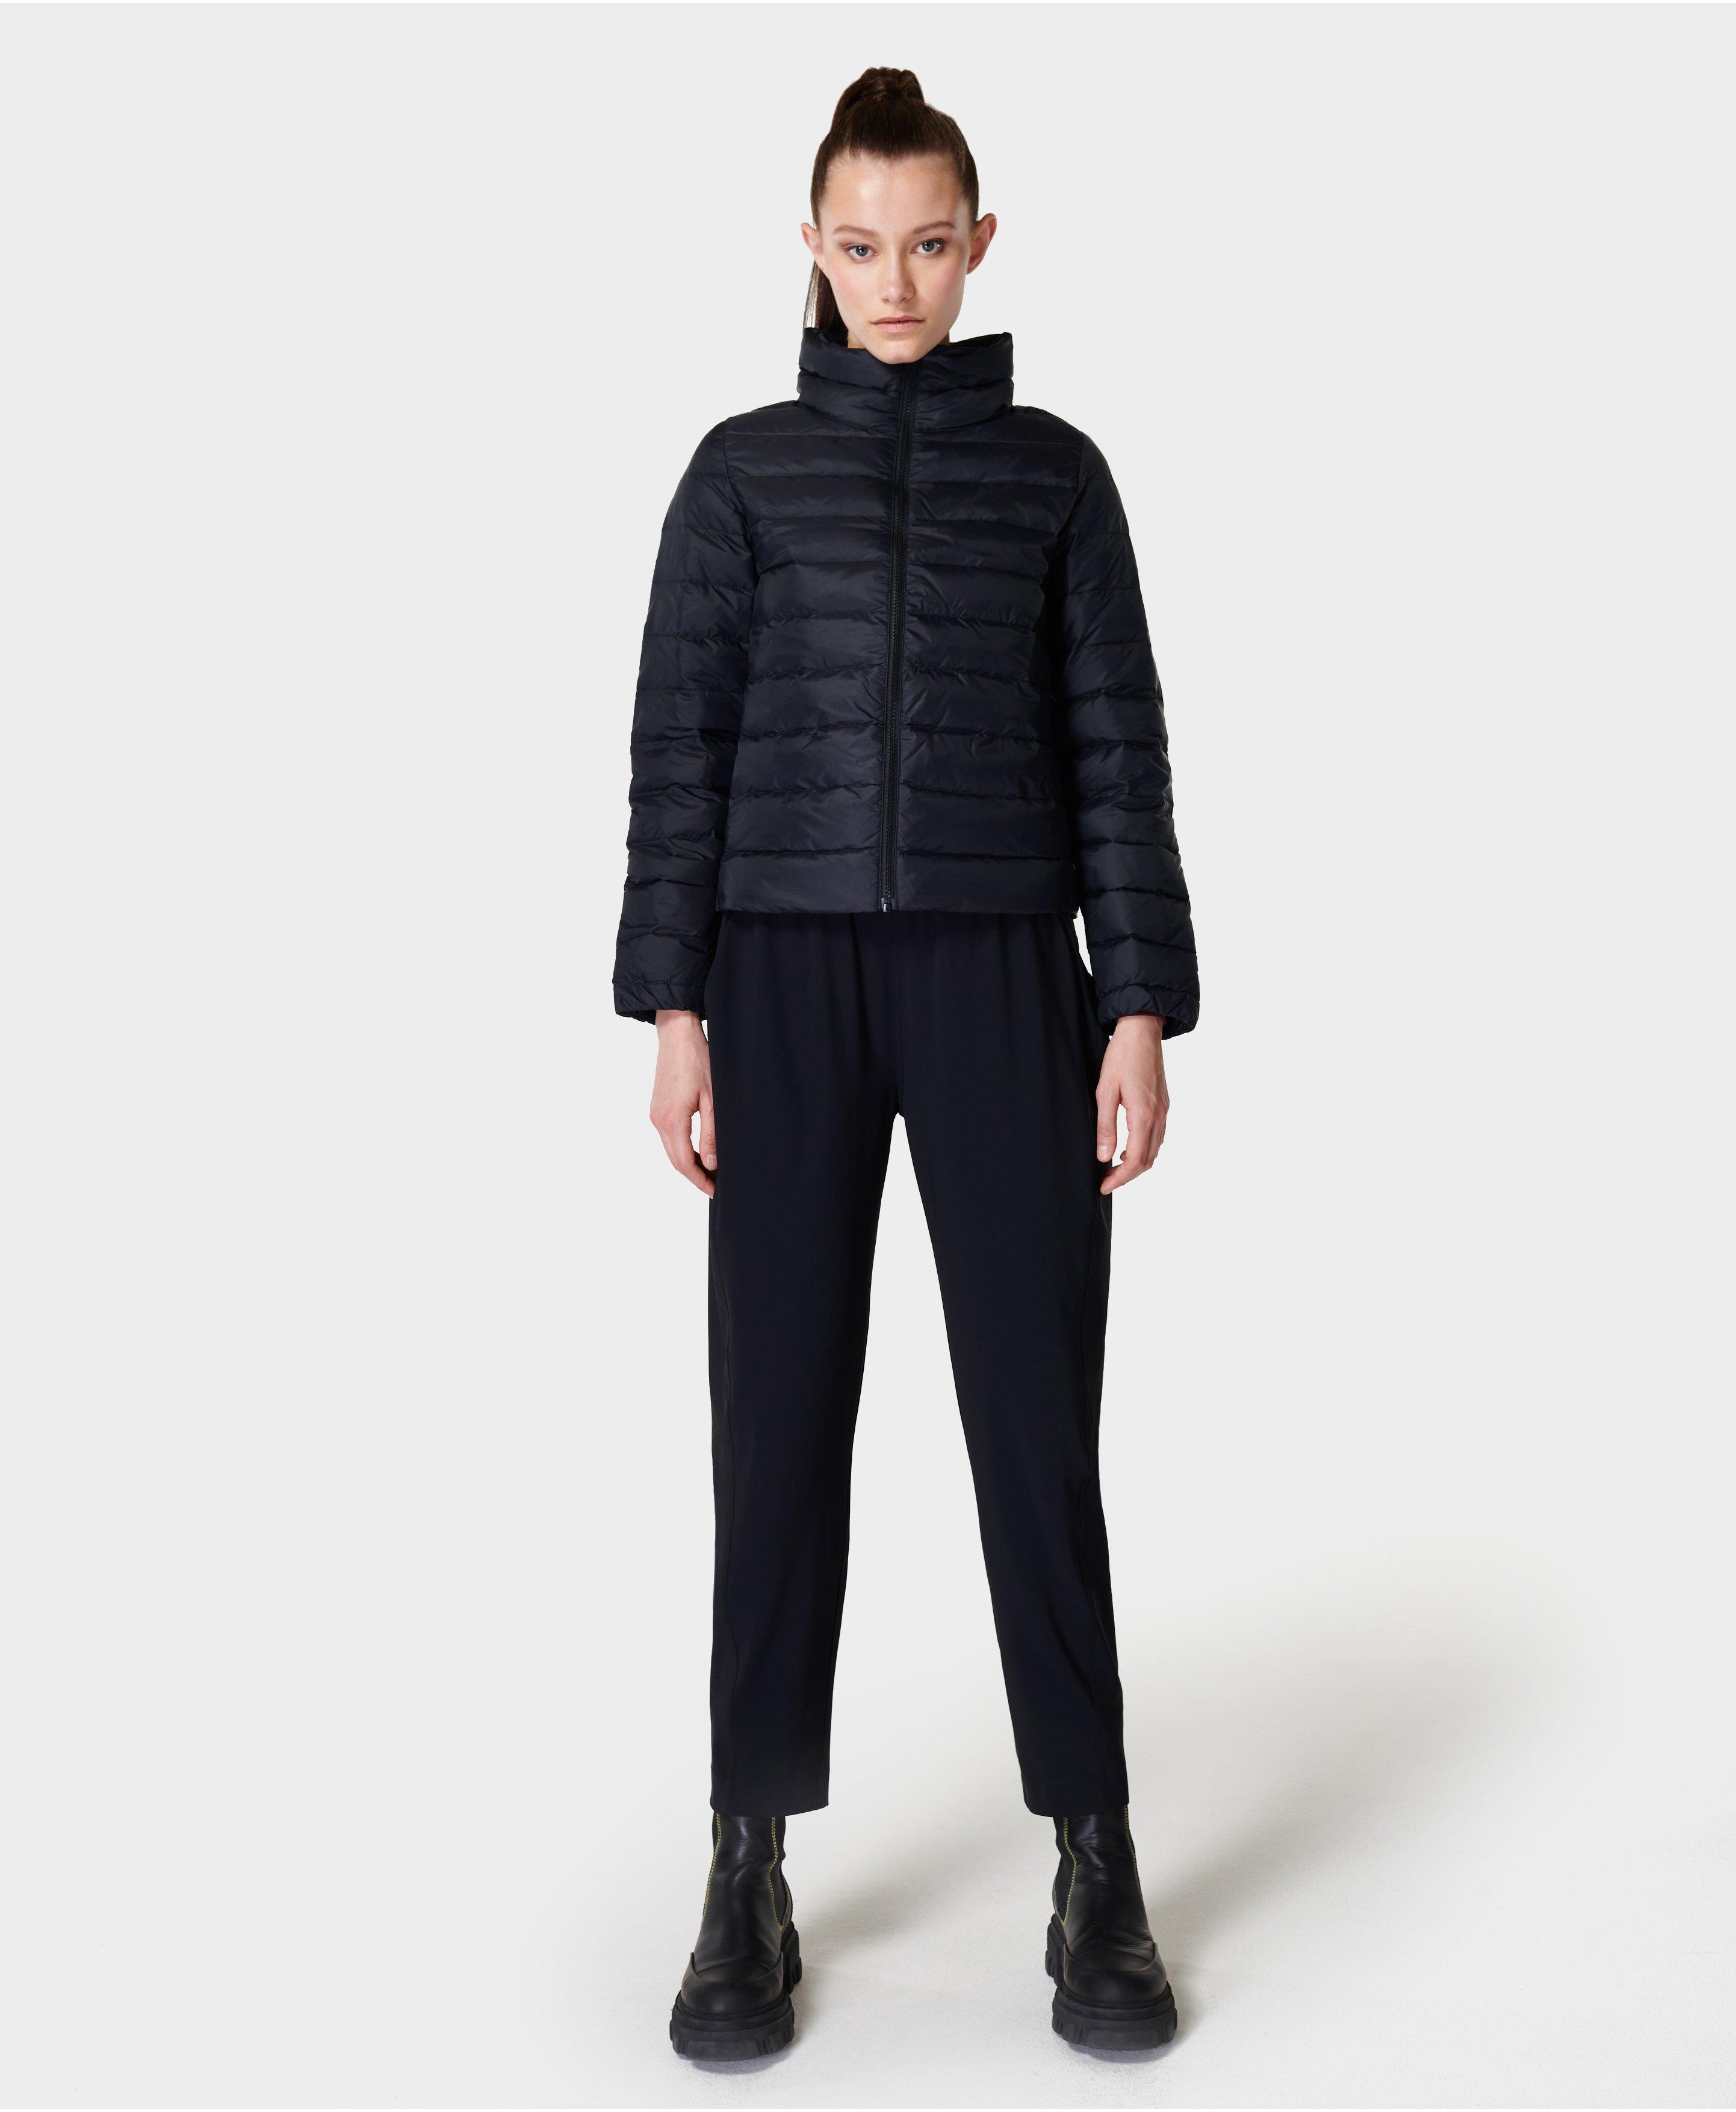 Pathfinder Packable Jacket - Black, Women's Jackets & Coats